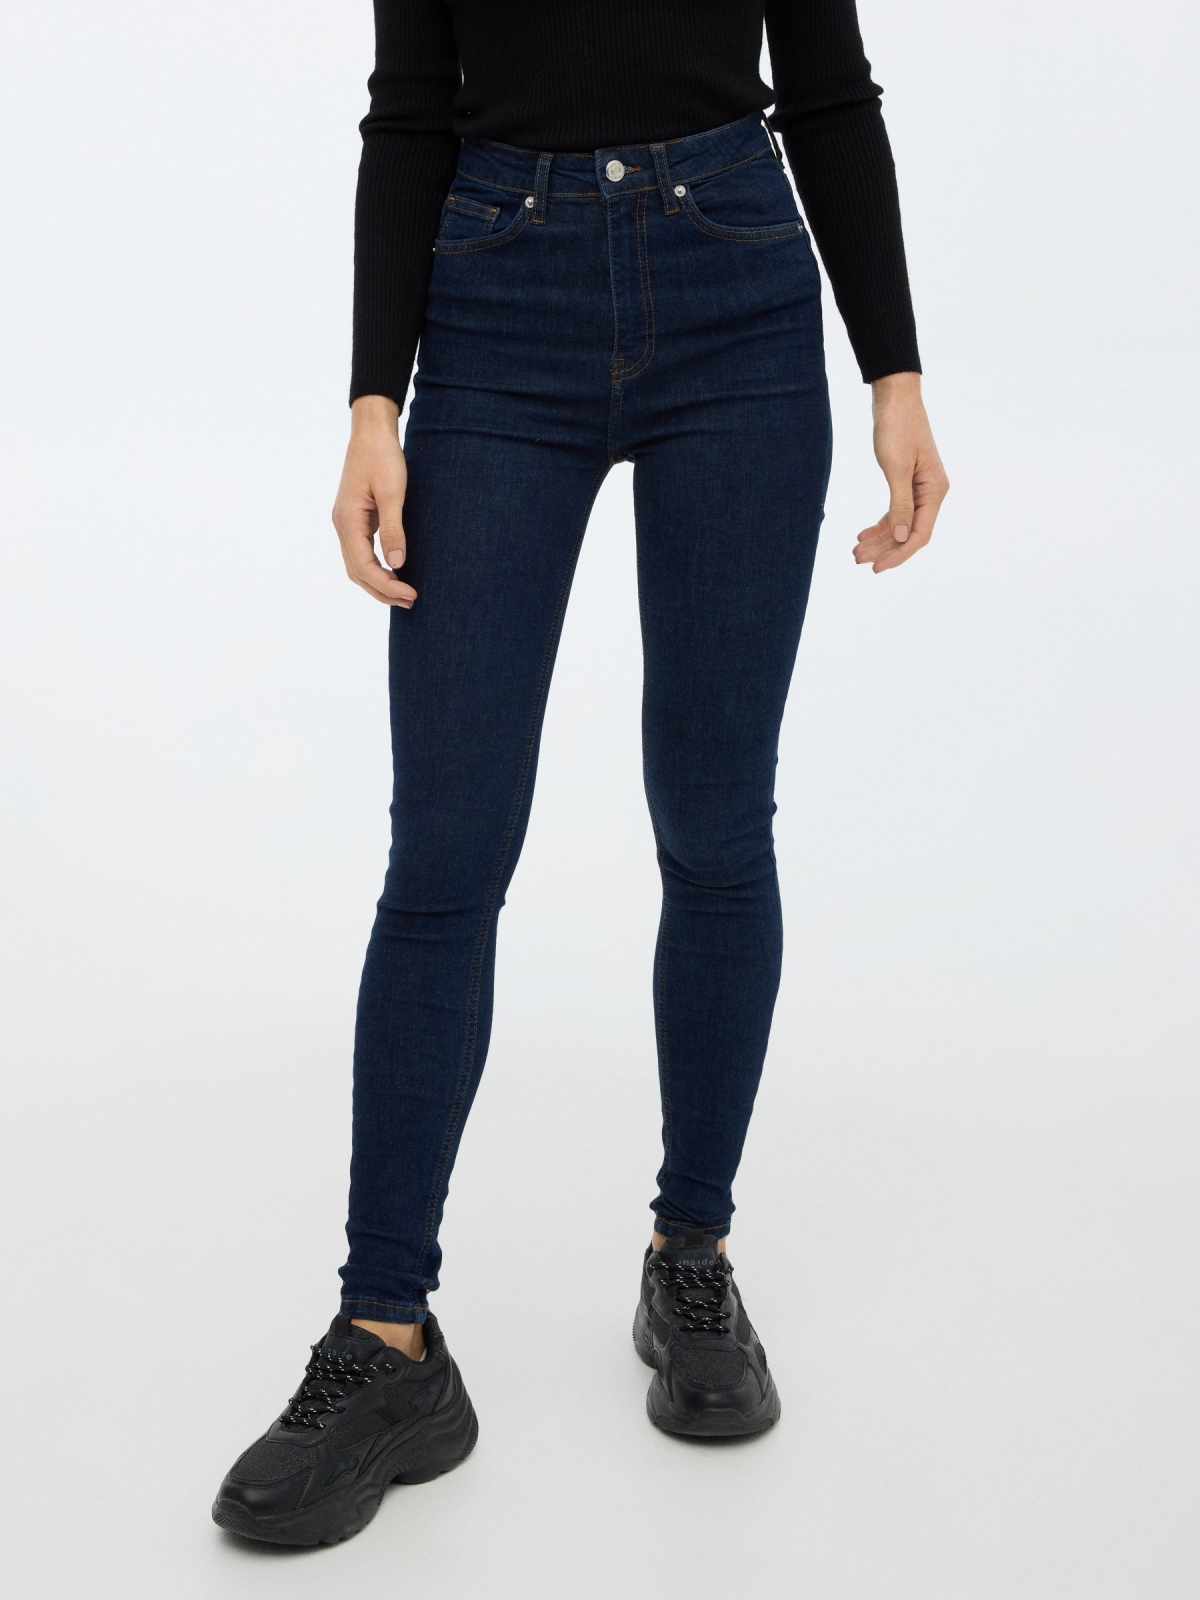 High rise skinny jeans | Women's Jeans | INSIDE